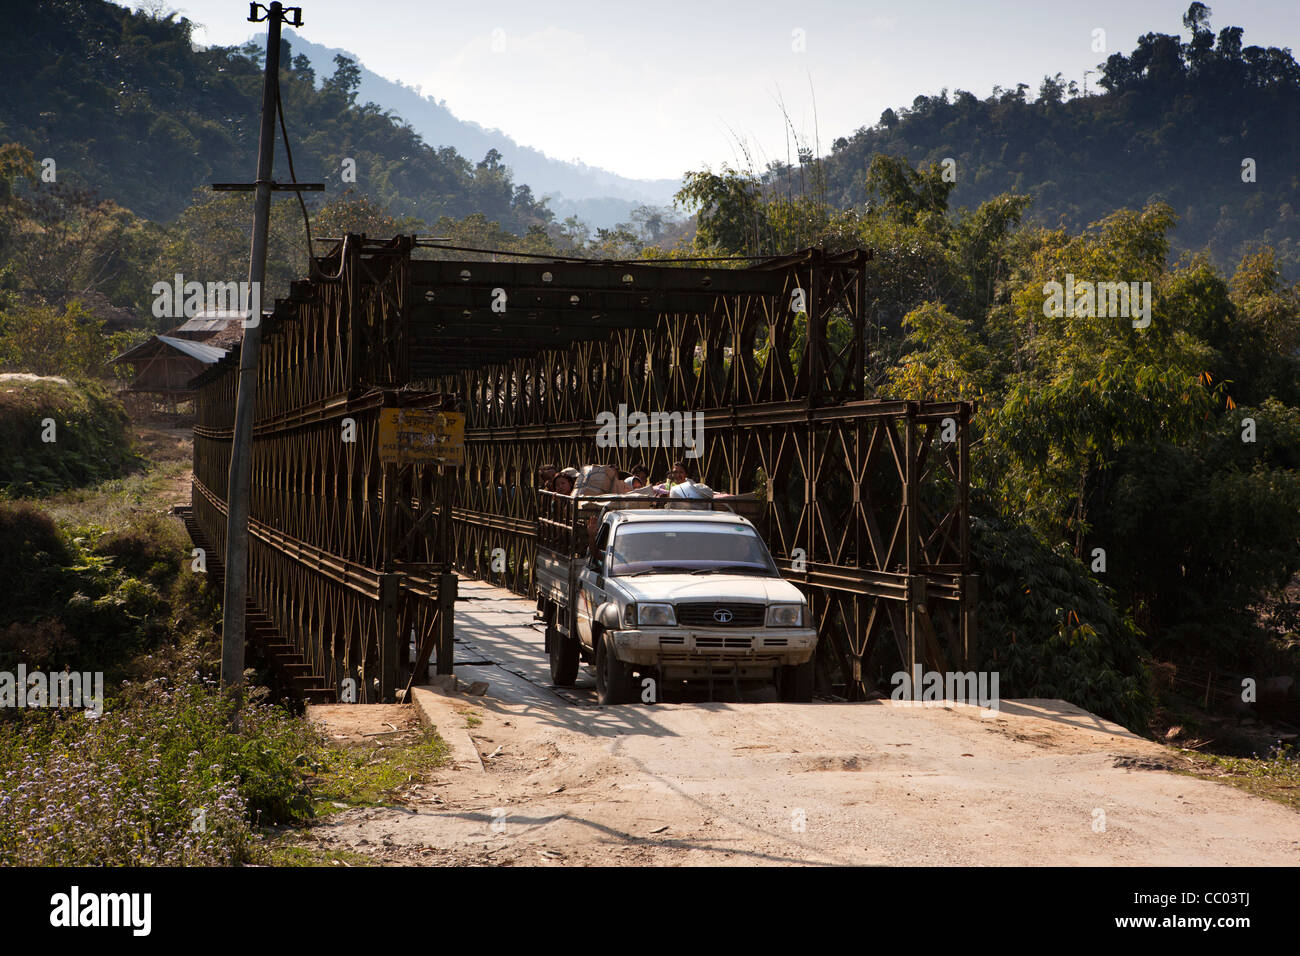 India, Arunachal Pradesh, Daporijo, tata pickup crossing old metal bridge over Subansiri river Stock Photo